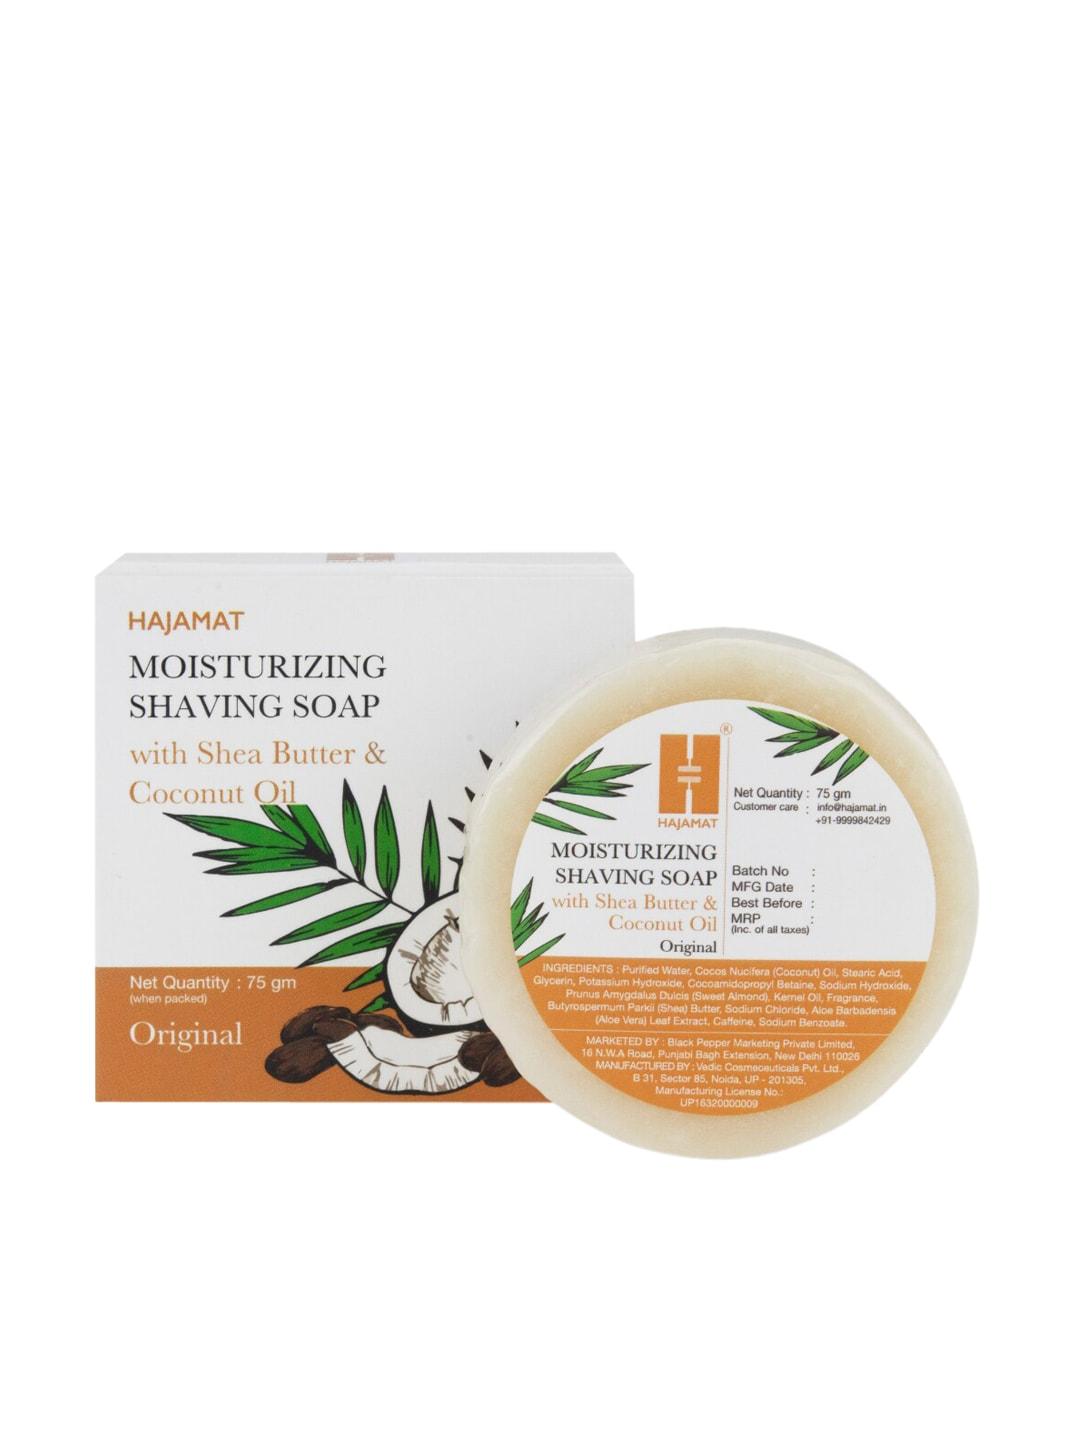 hajamat original moisturizing shaving soap with shea butter & coconut oil - 75 g